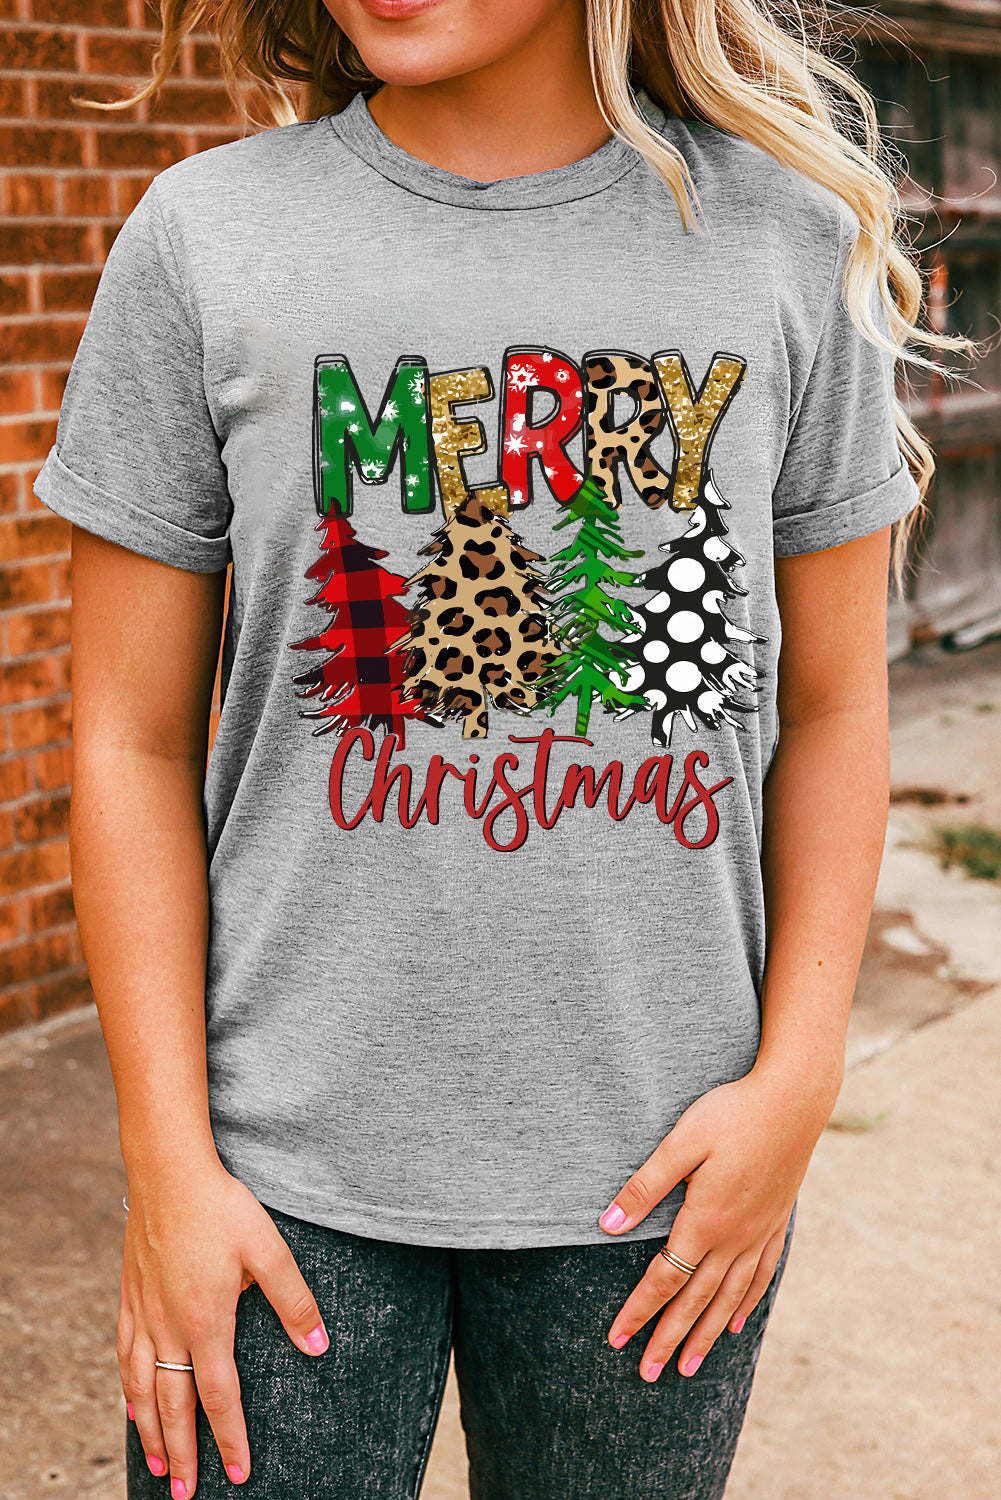 Merry Christmas shirt